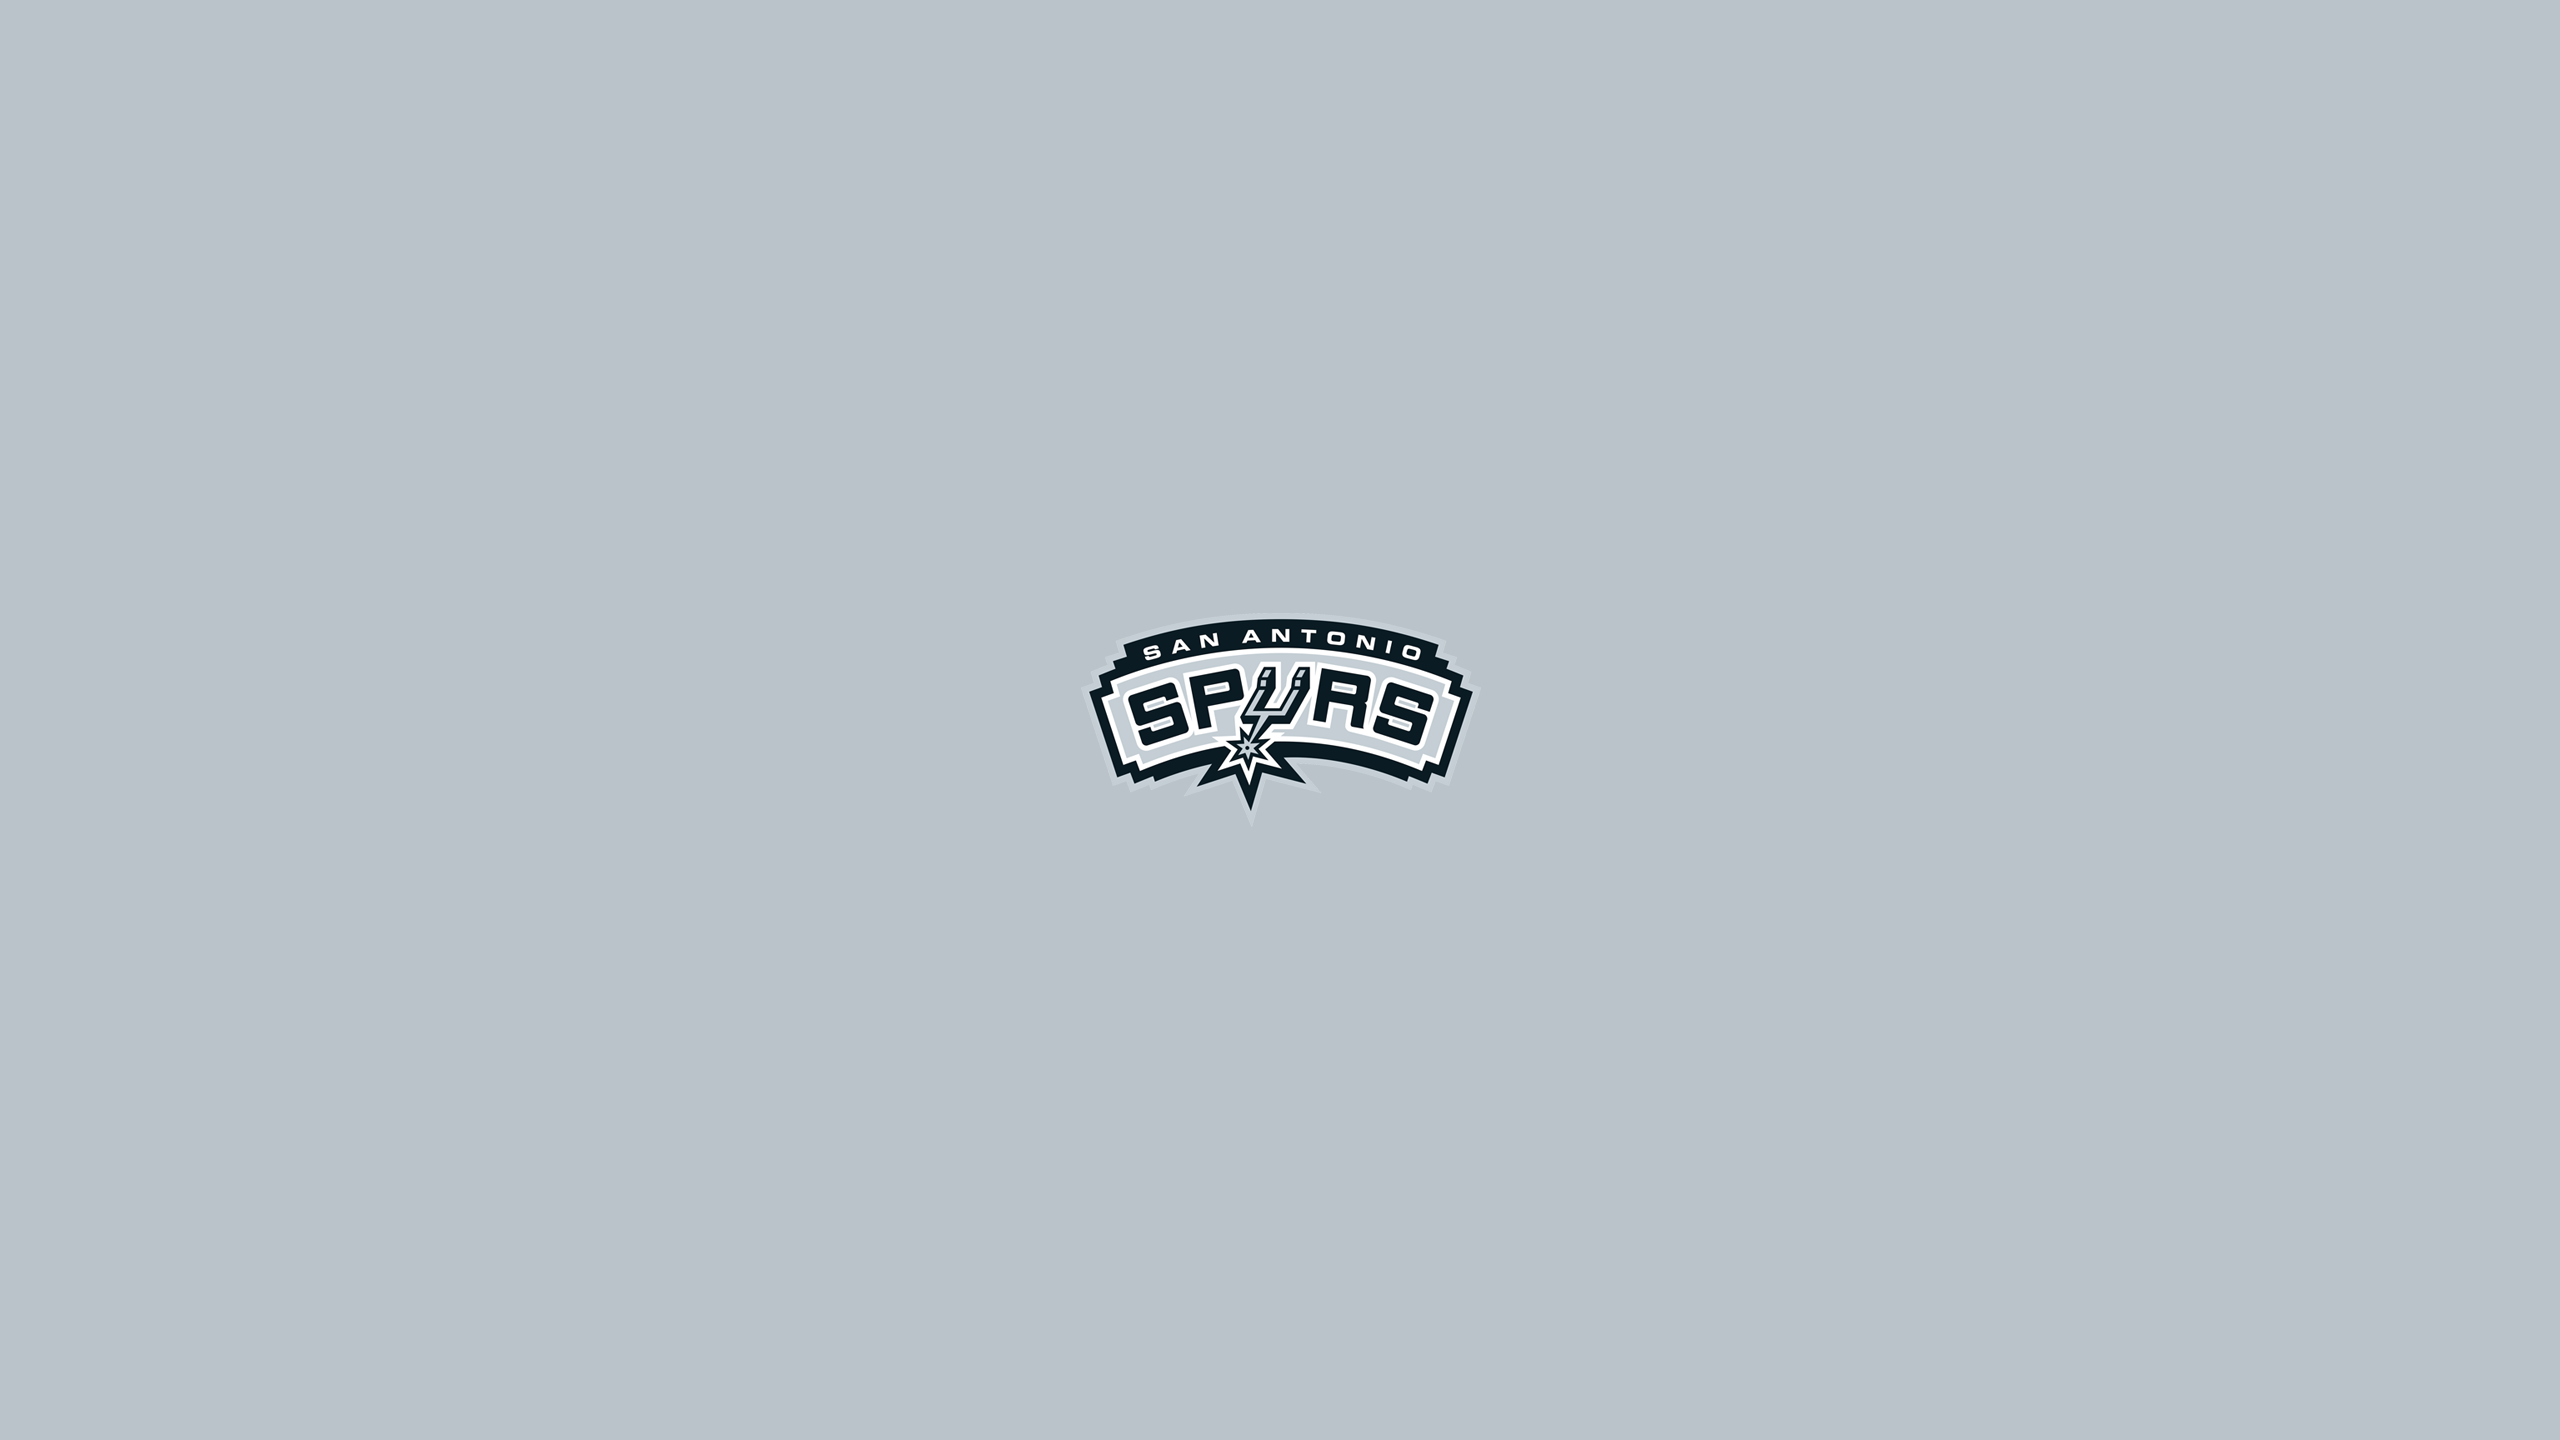 100+] San Antonio Spurs Wallpapers